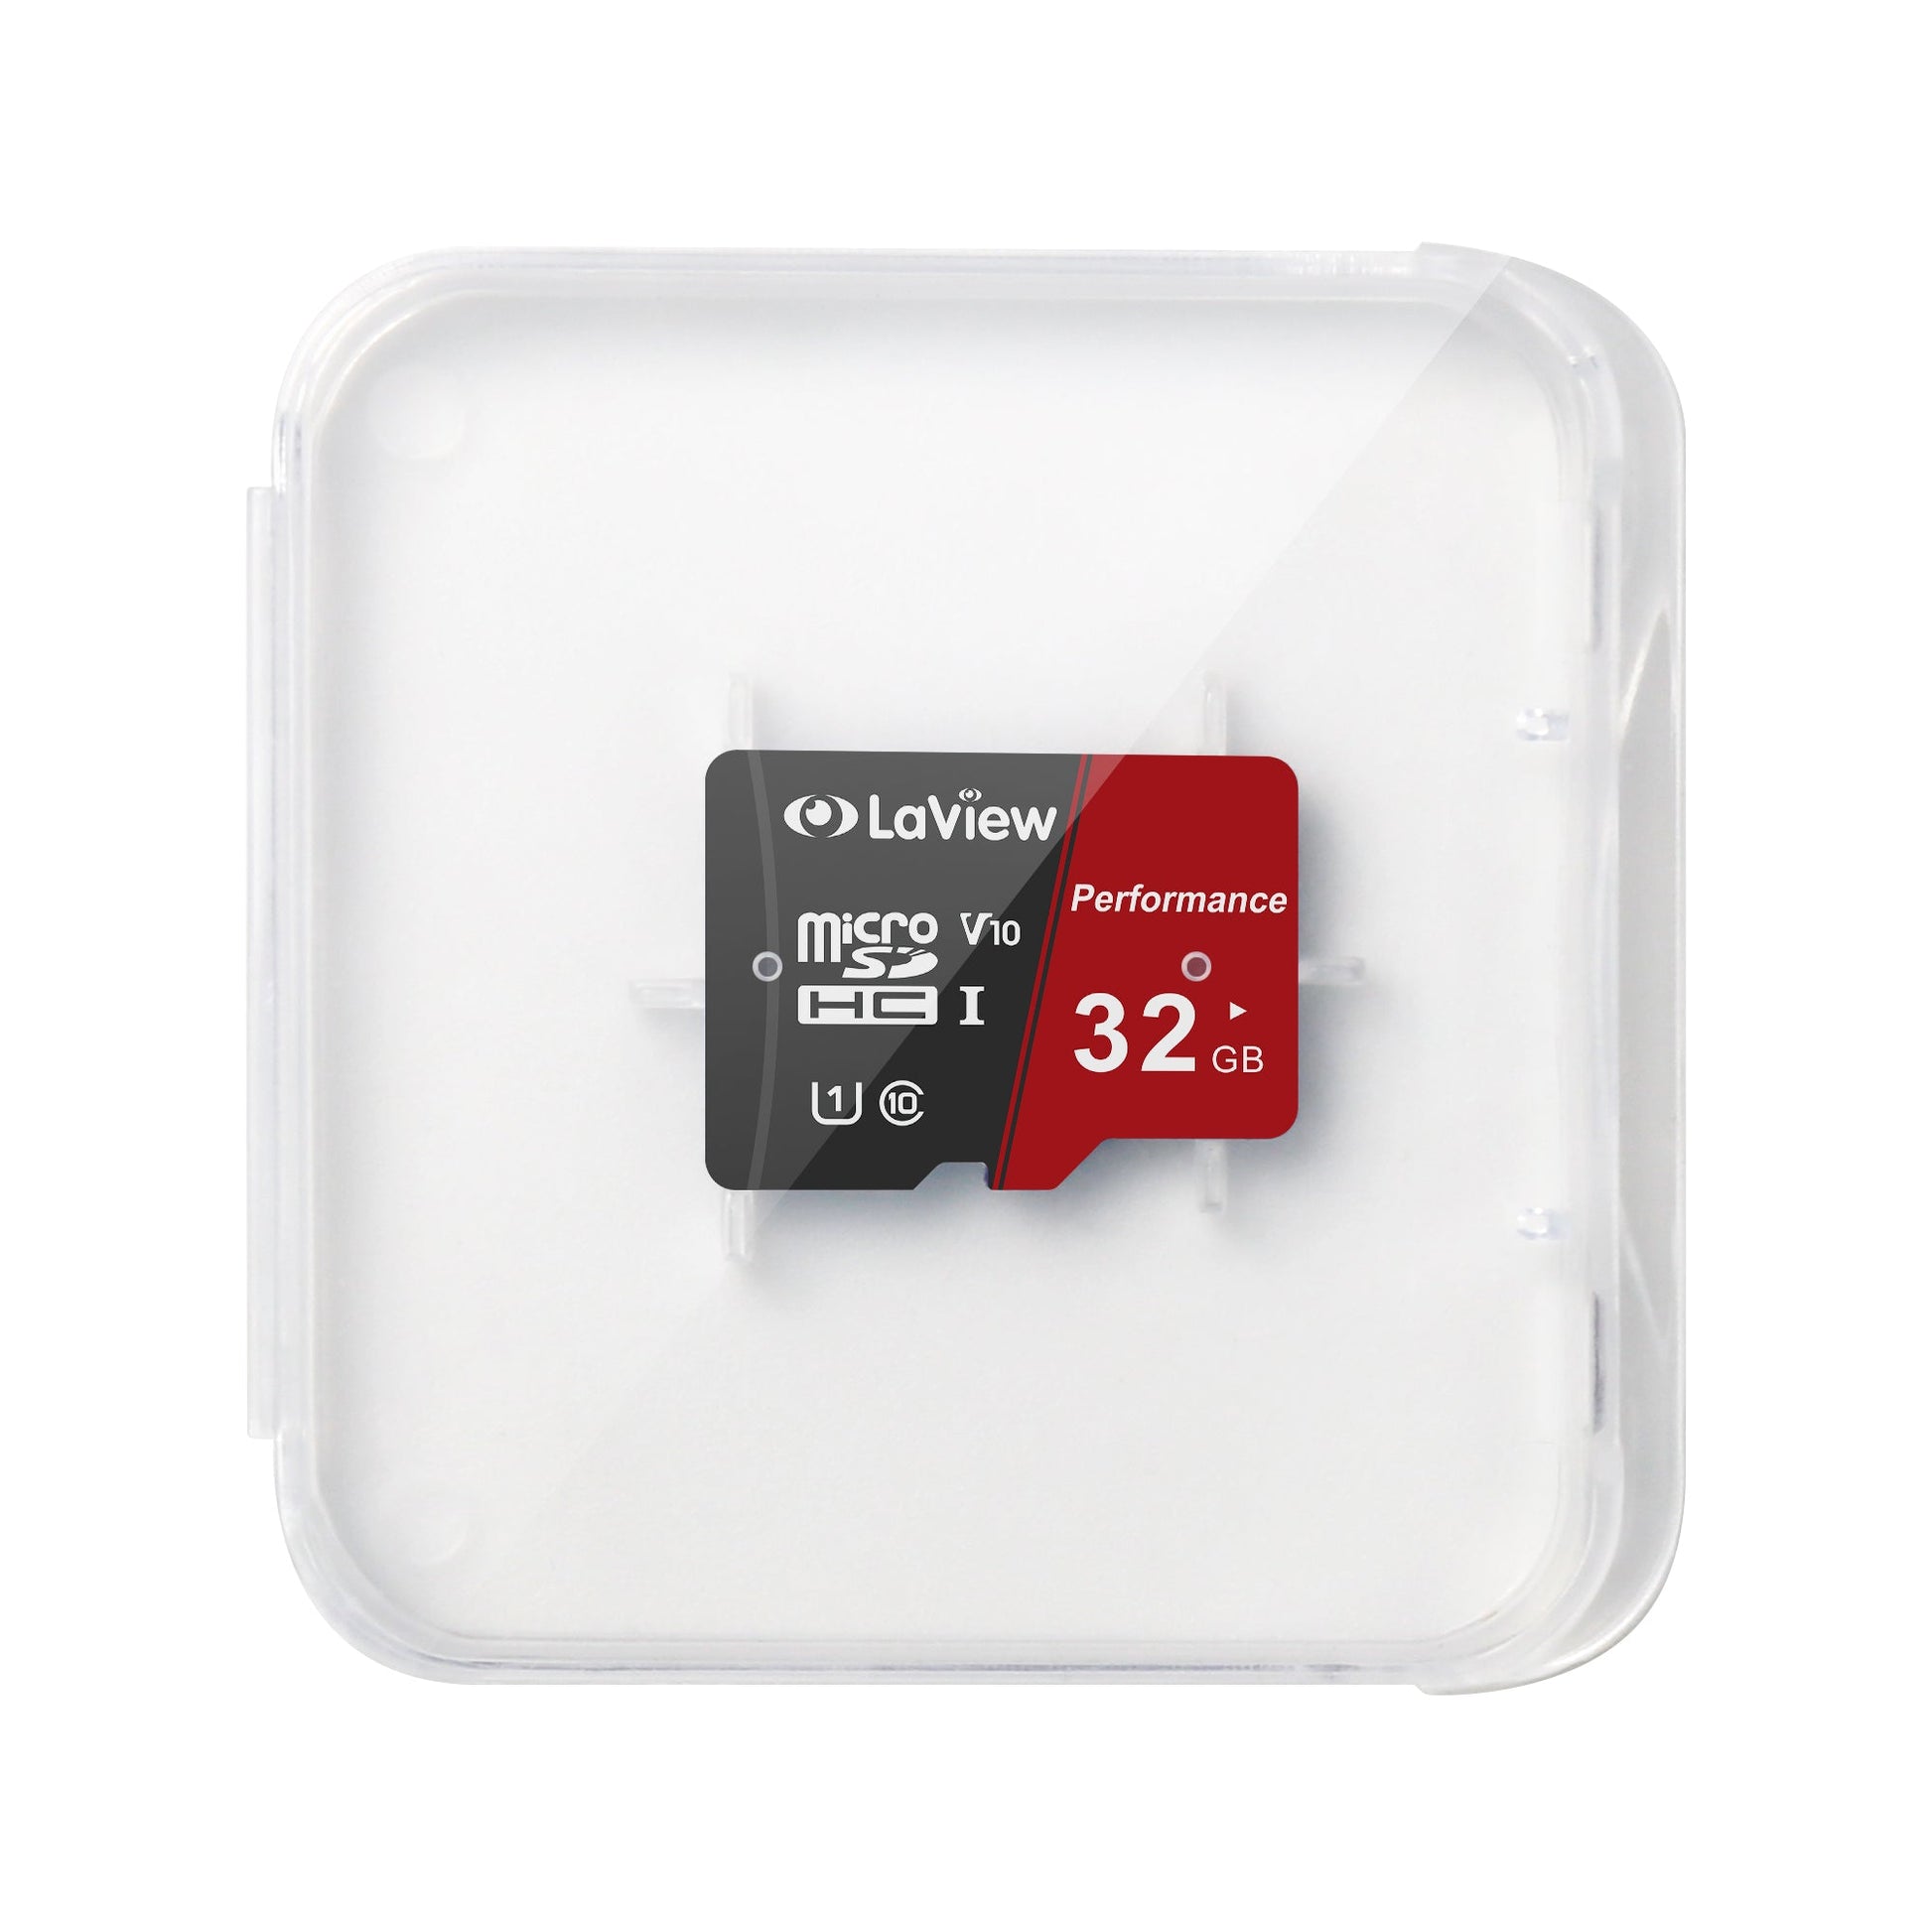 Laview MicroSD – LaView Store USA